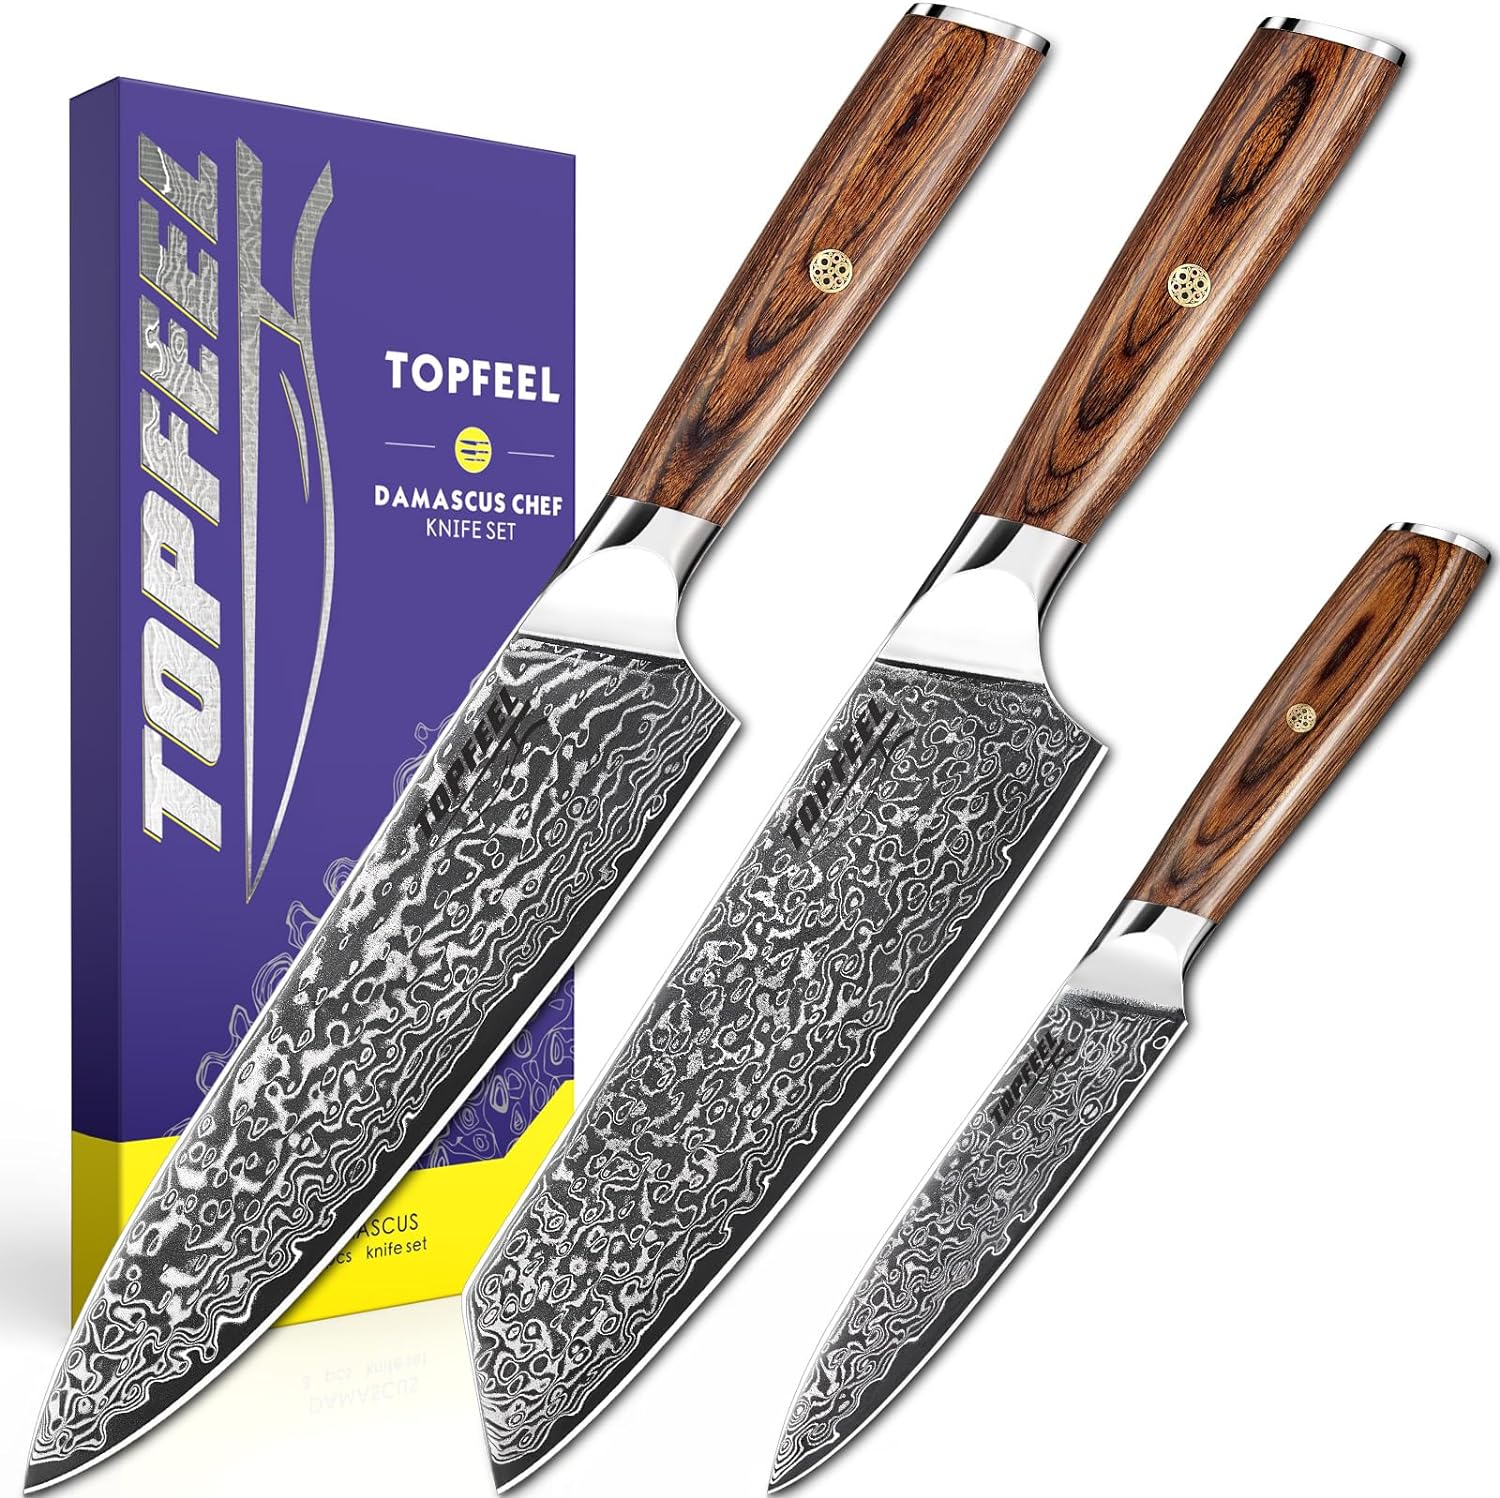 Topfeel Damascus Knife Set 3PCS, Damascus Japanese VG-10 stainless steel Chef Knife Set Professional, Ultra-Sharp Kitchen Cooking Knife with Ergonomic Wood Handle